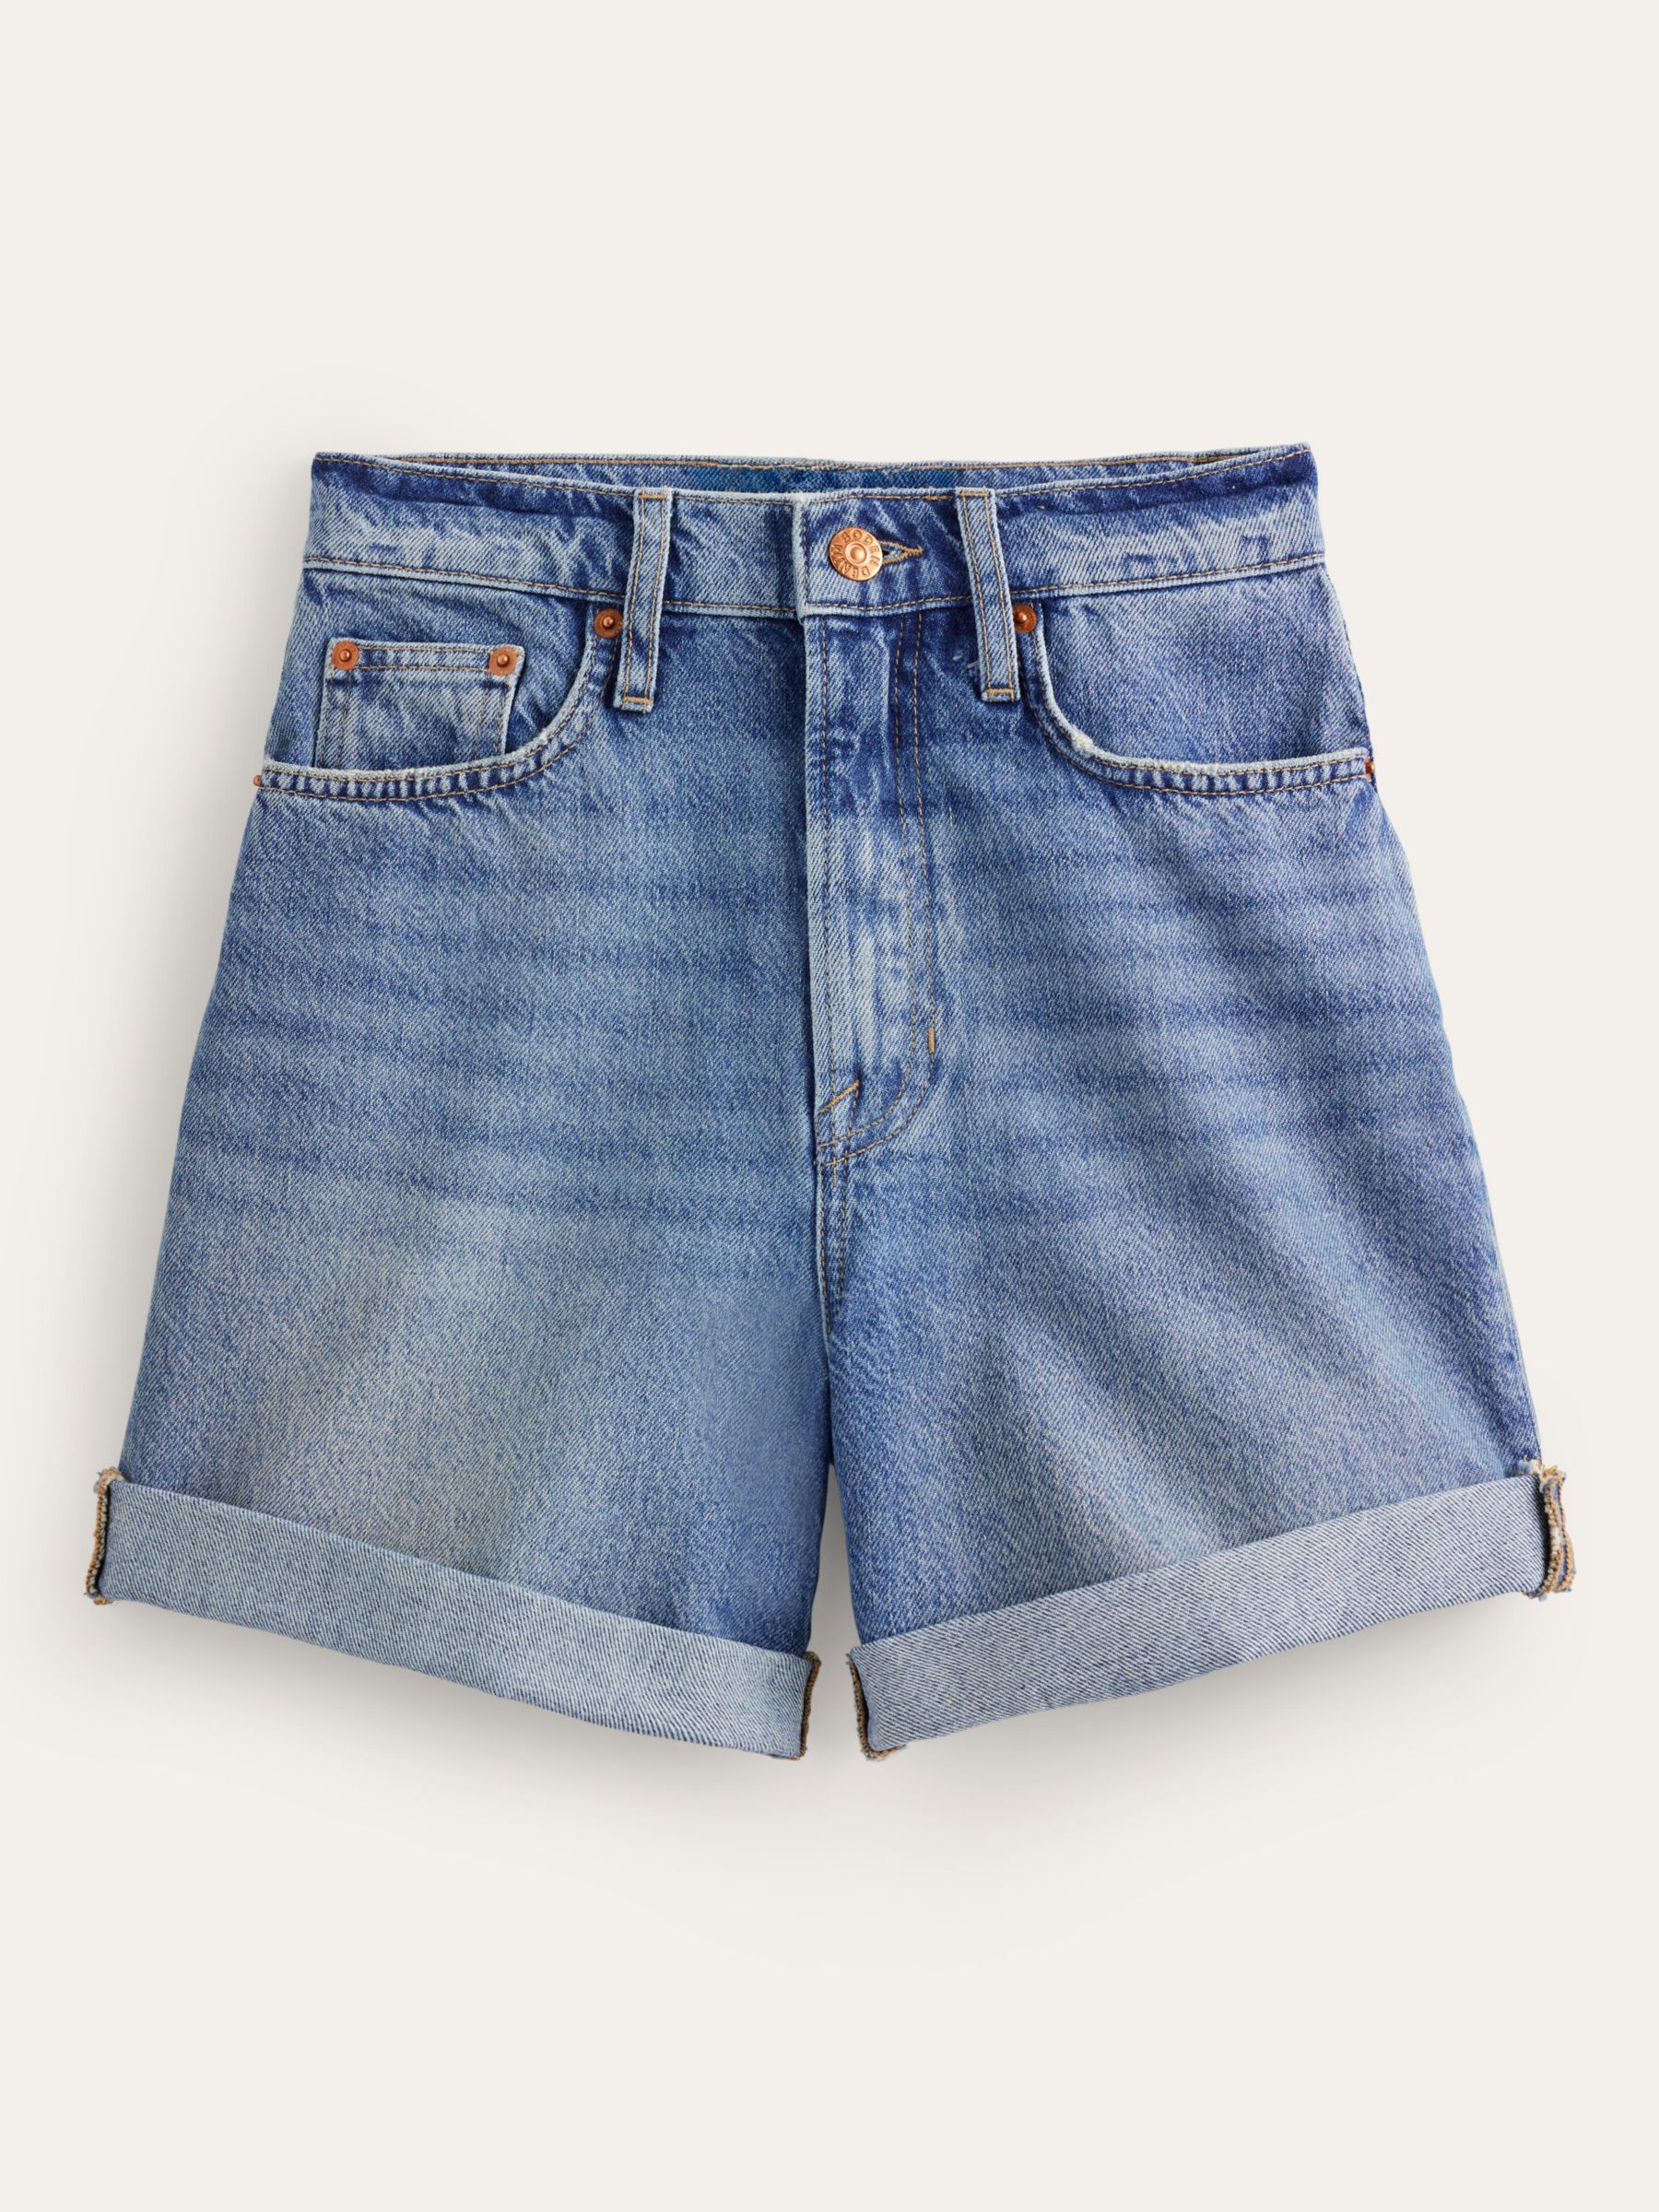 Boden Denim Shorts, Mid Vintage, 8